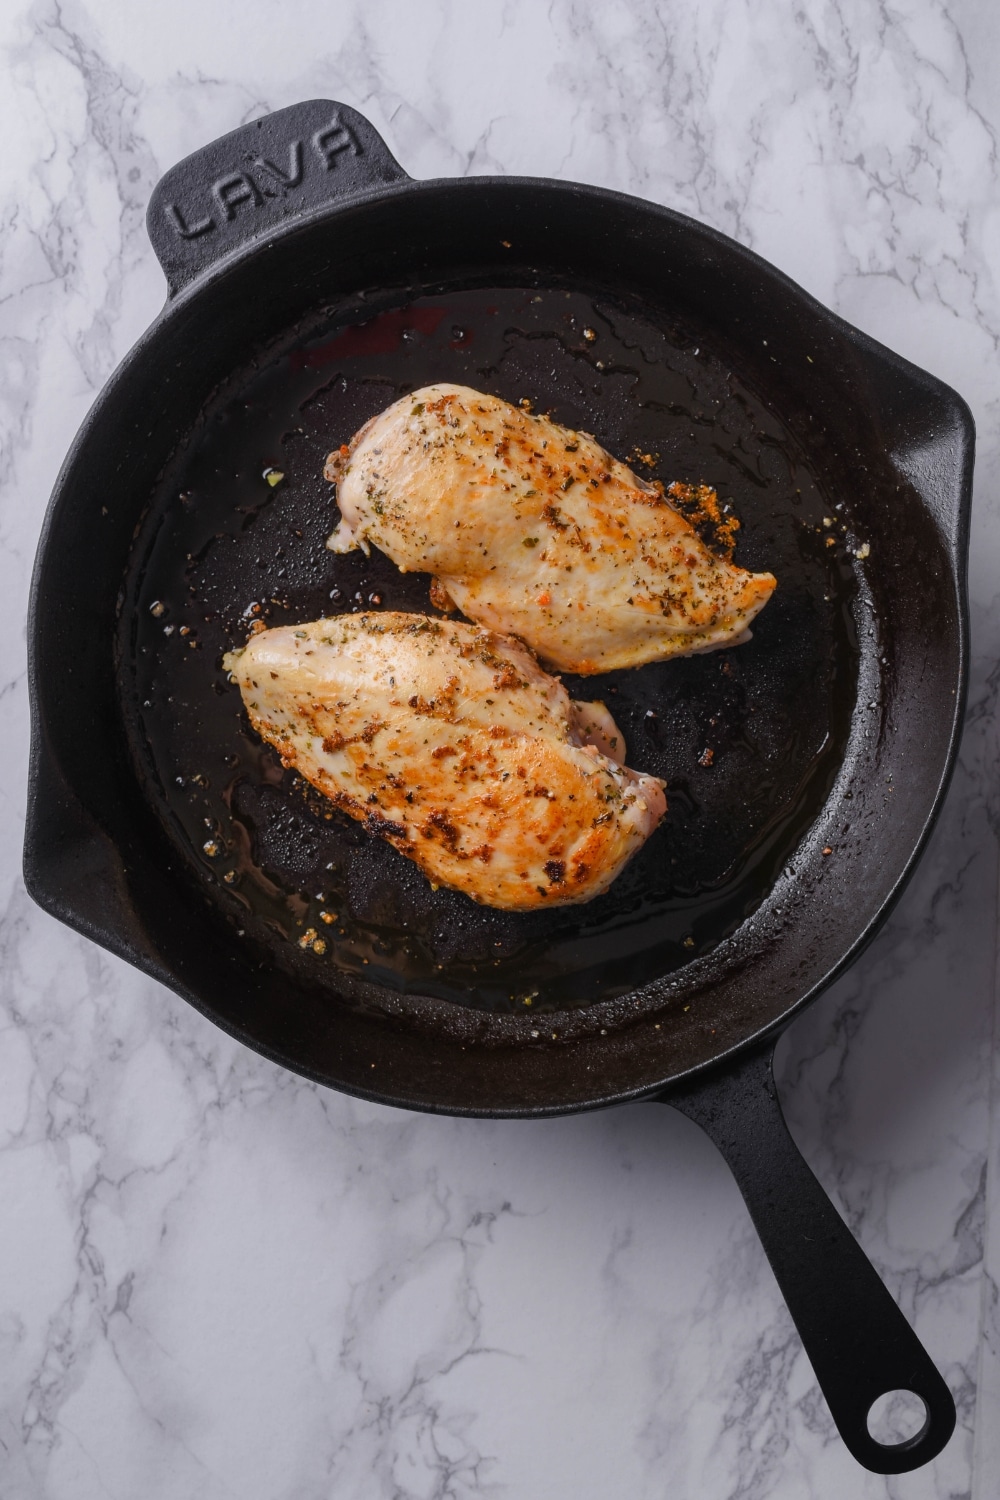 Seared seasoned chicken breasts in a cast iron skillet.